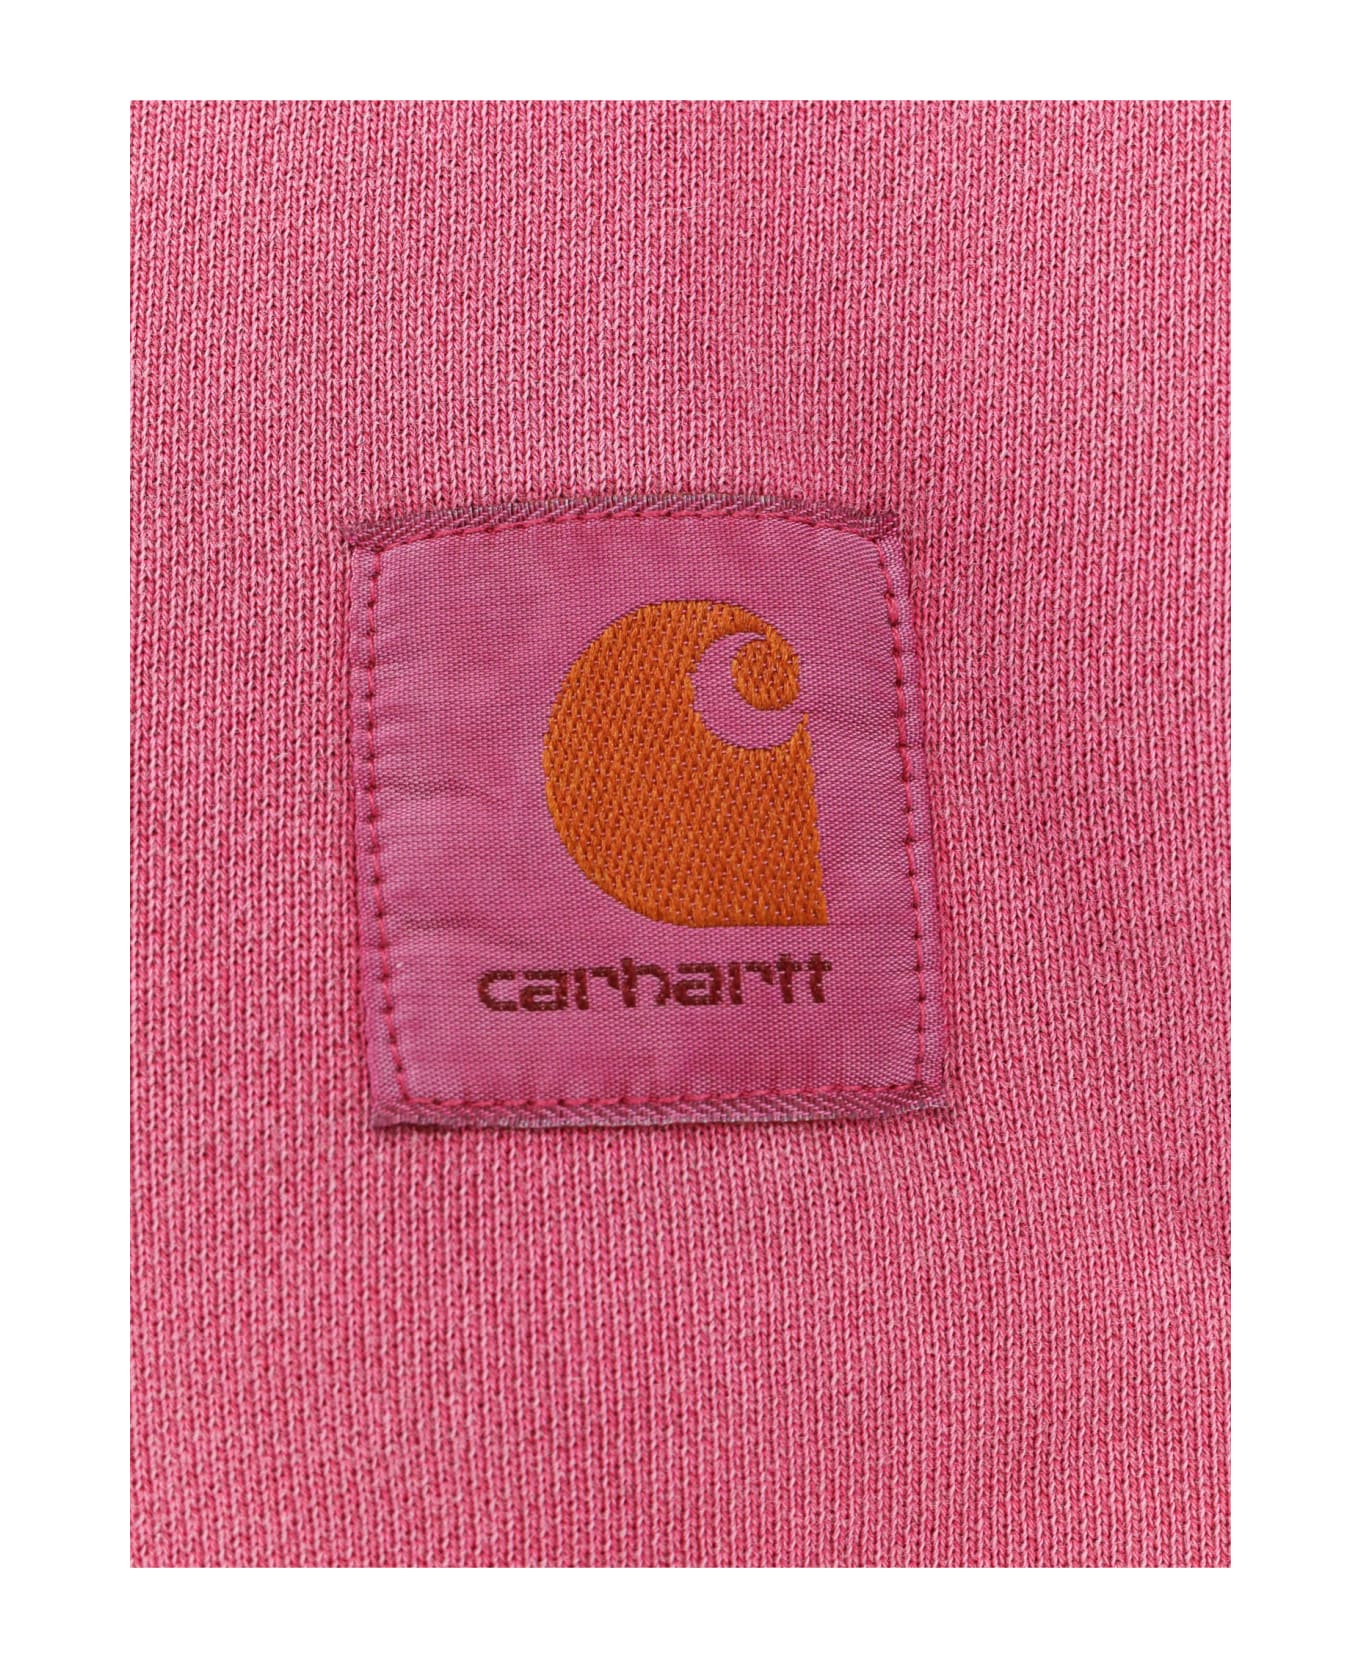 Carhartt Sweatshirt - Pink フリース